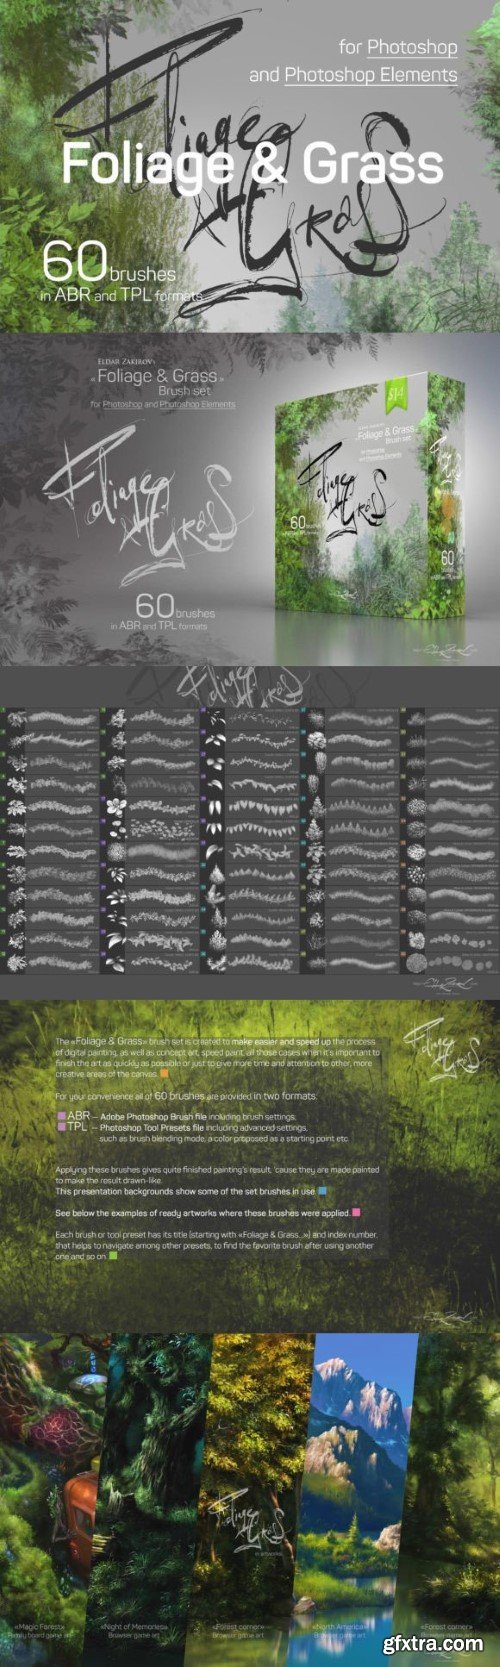 Foliage+Grass+Moss Photoshop Brushes